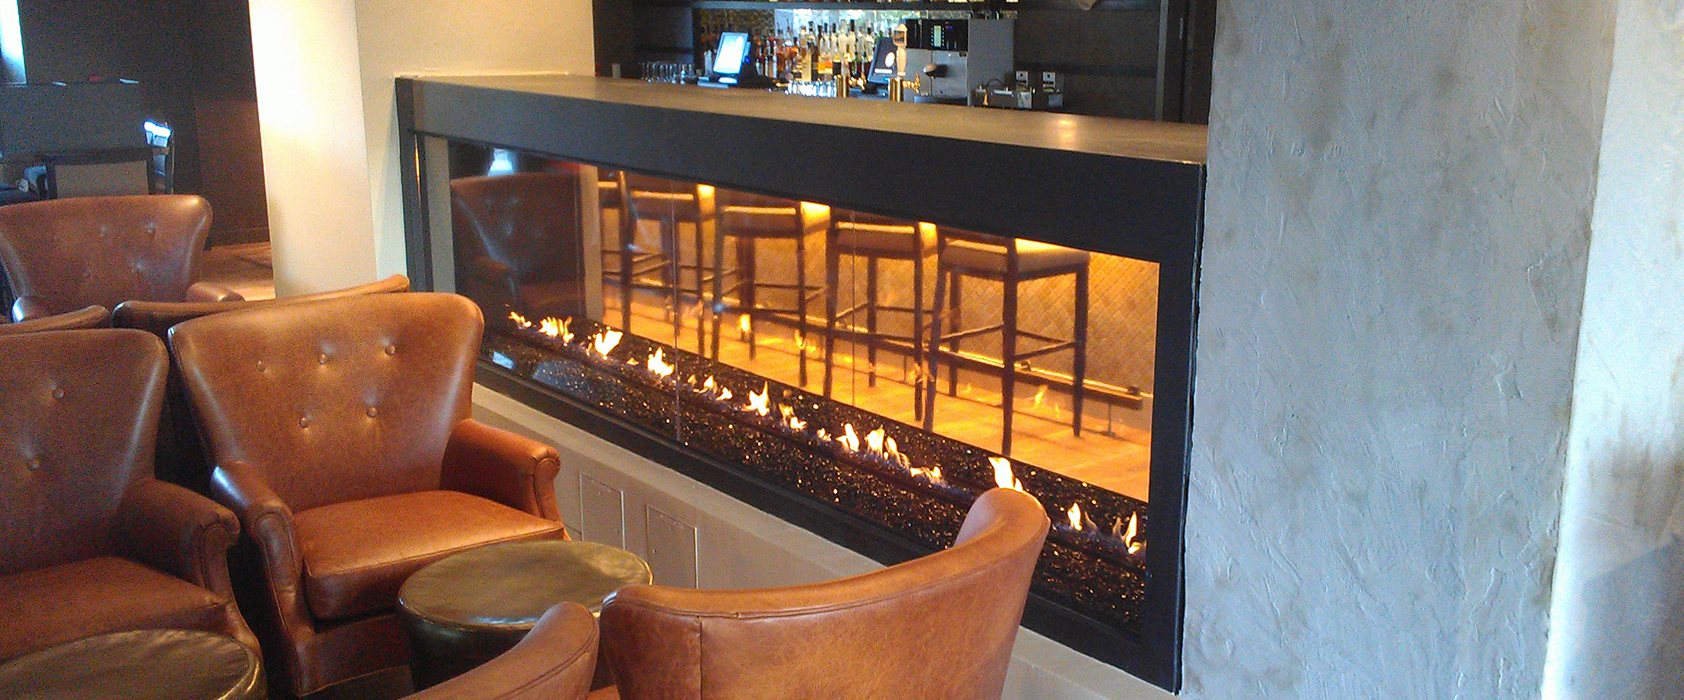 double-sided custom fireplace